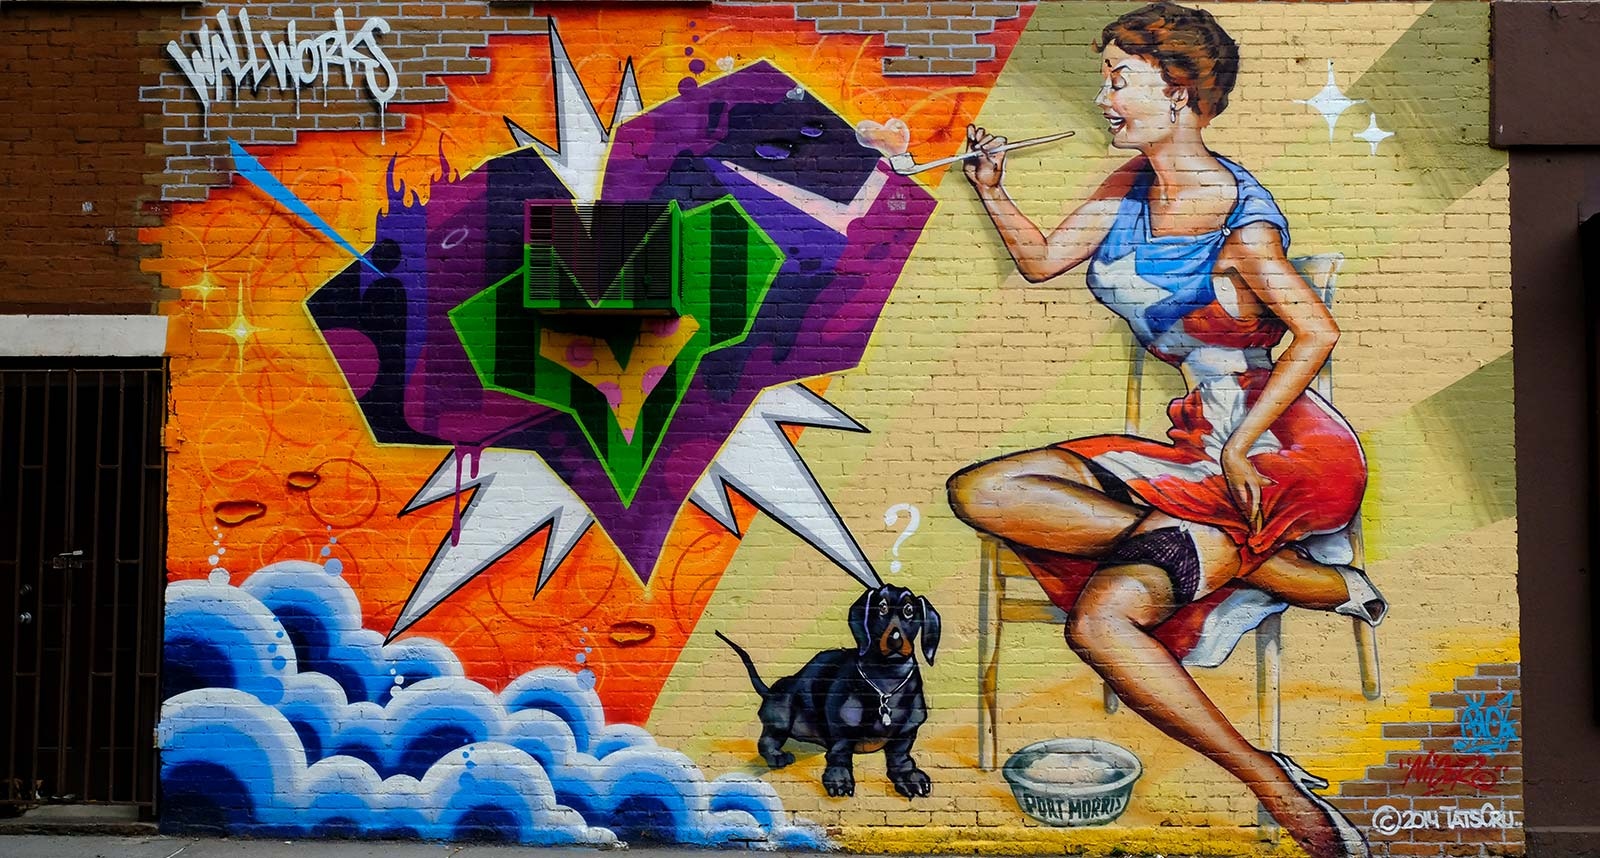 Image from Graffiti Art - Port Morris - NY